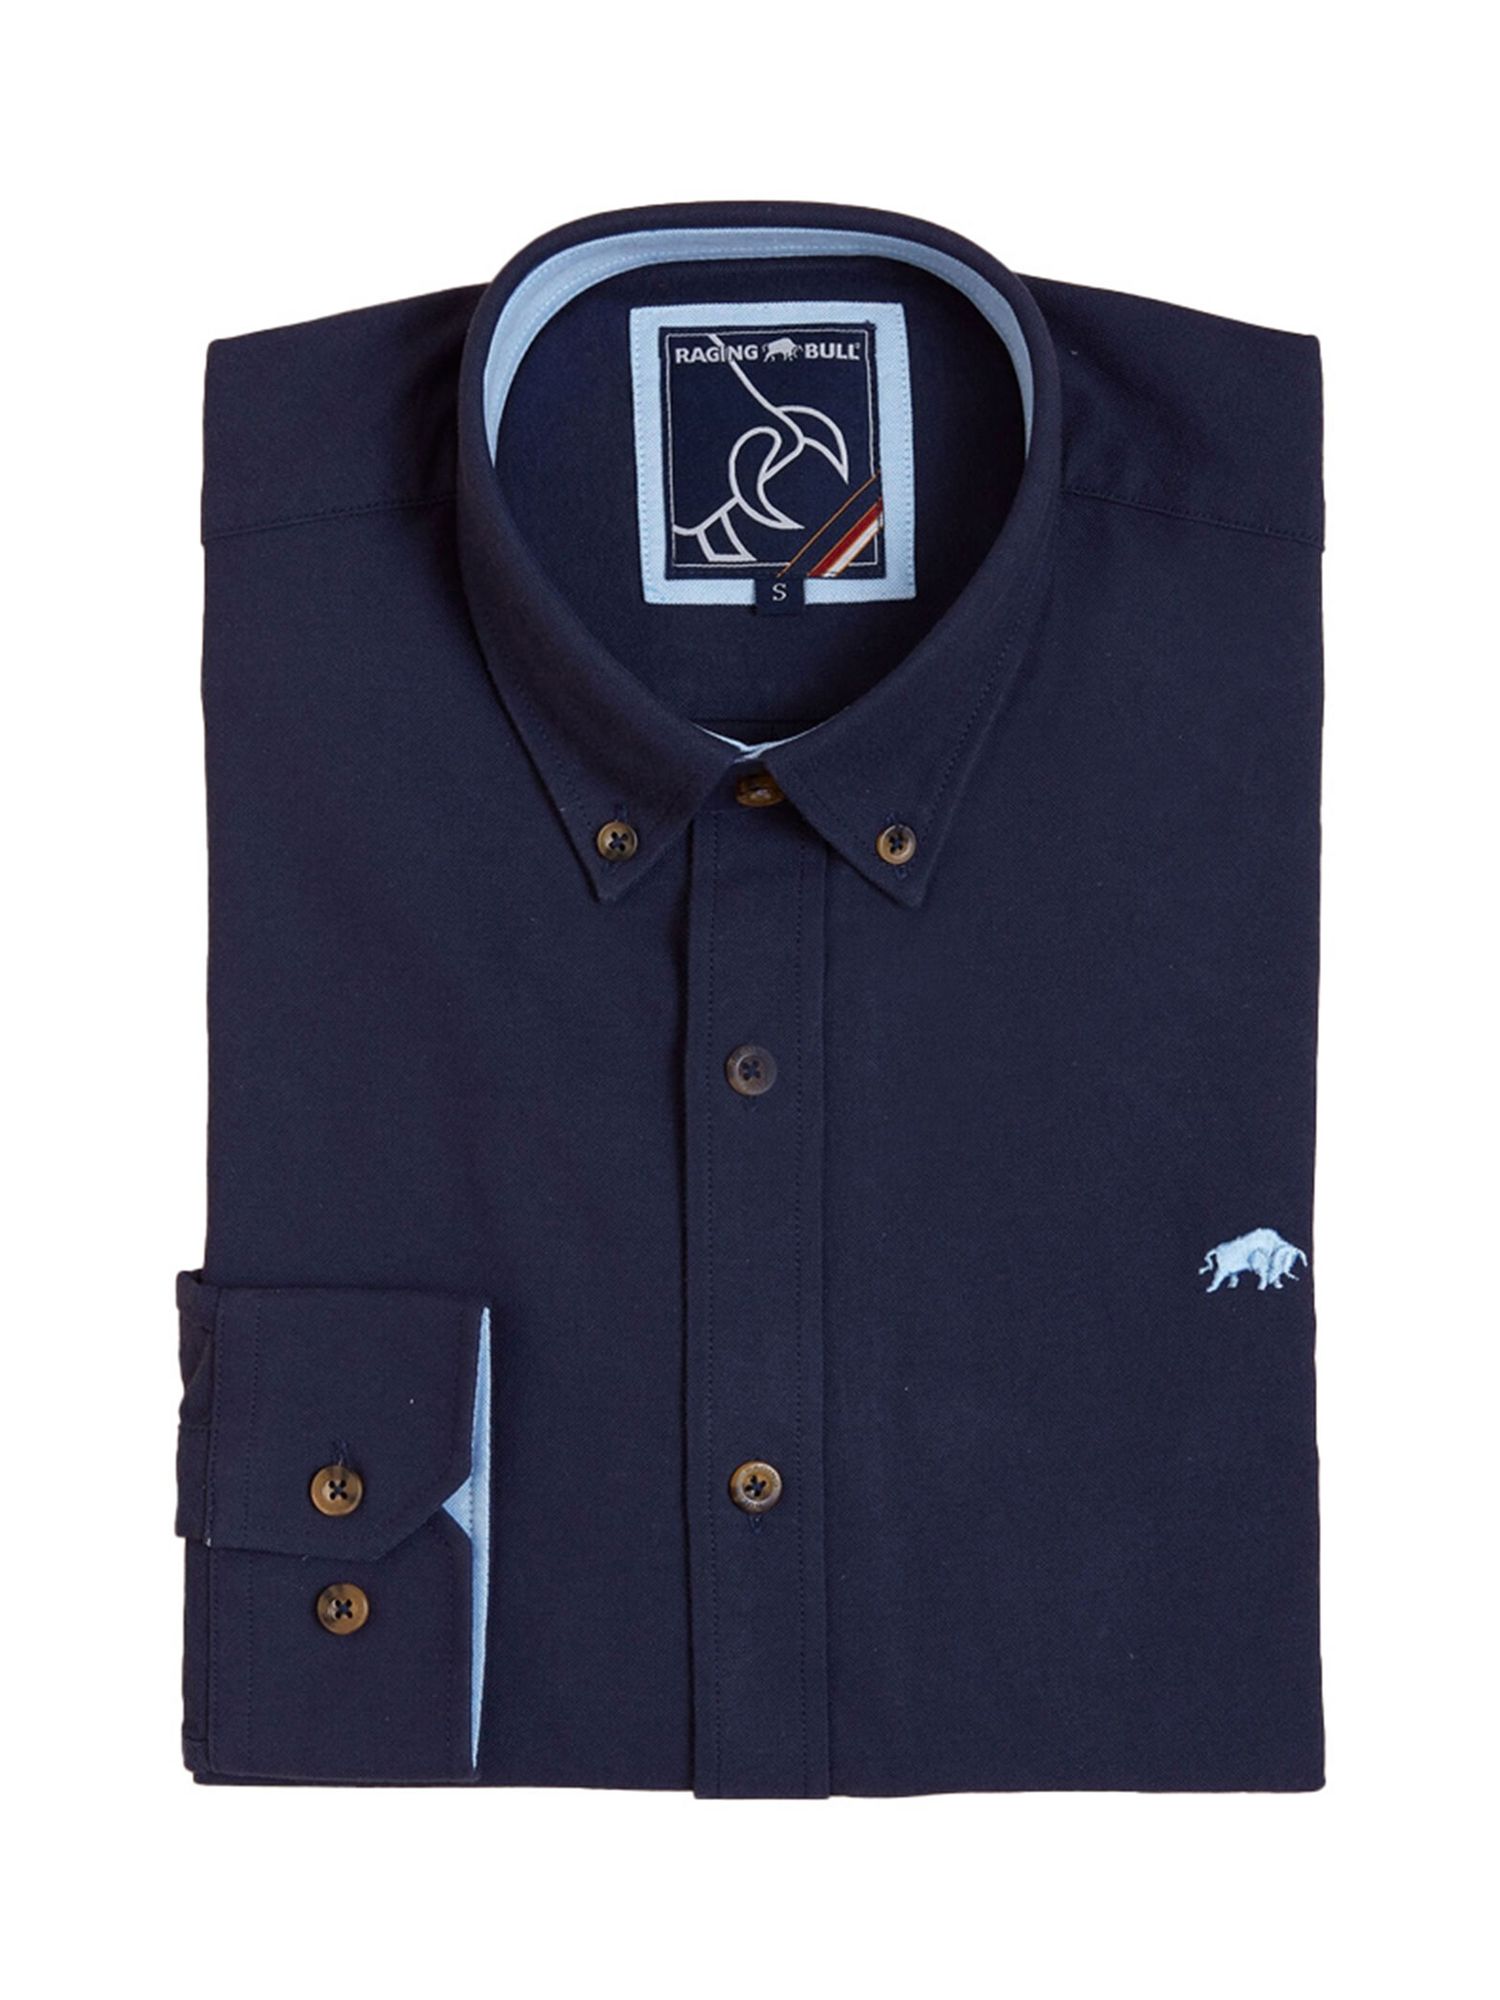 Buy Raging Bull Classic Oxford Shirt Online at johnlewis.com